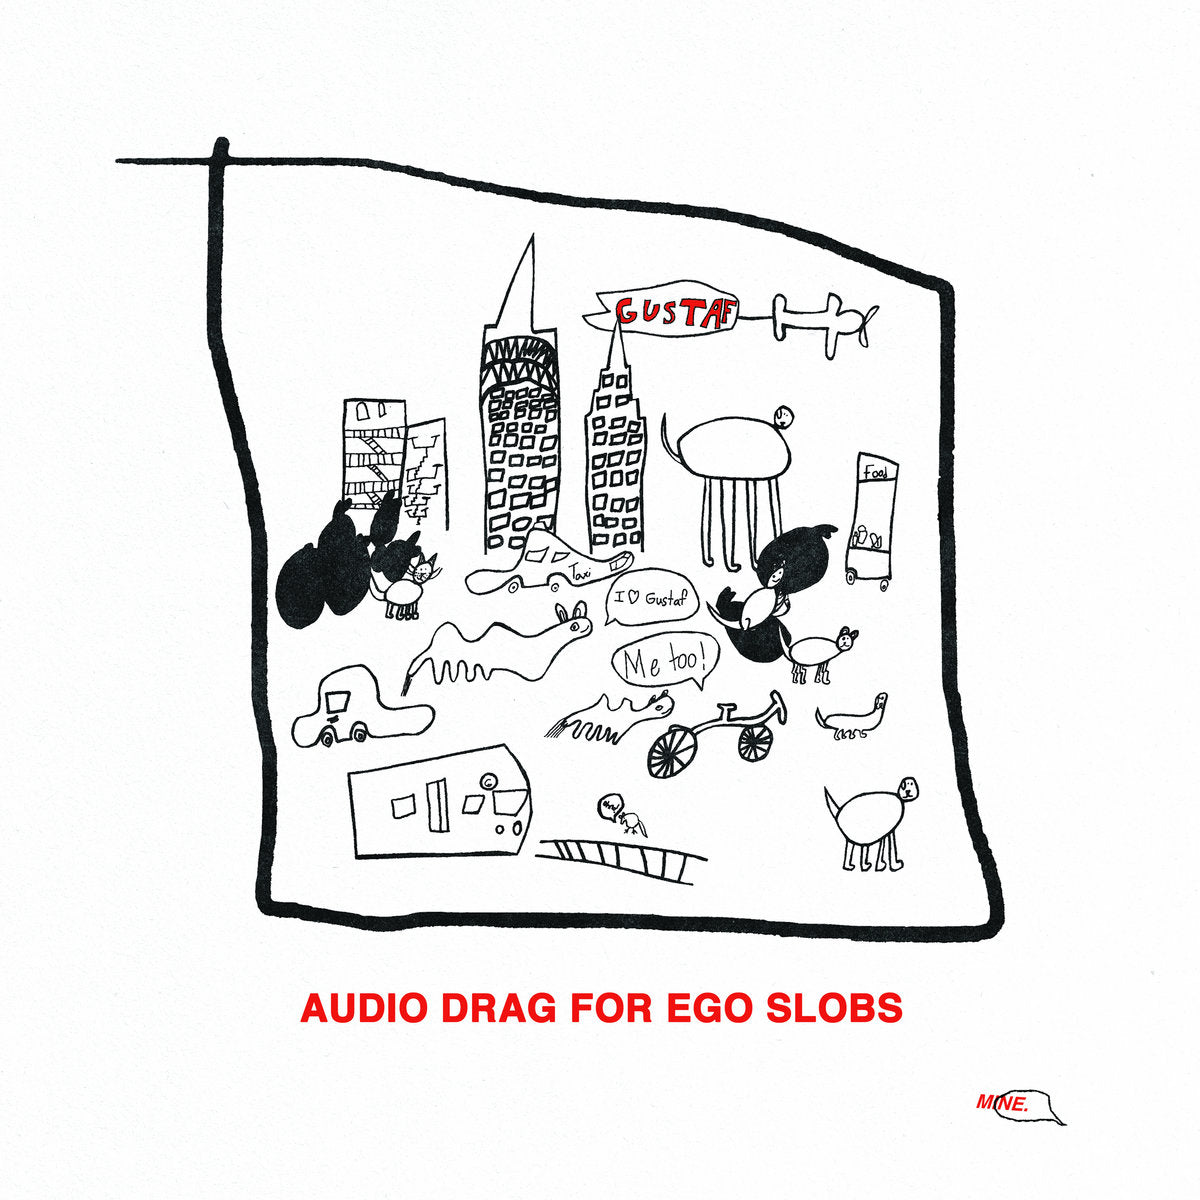 Gustaf - Audio Drag For Ego Slobs (Vinyl LP)